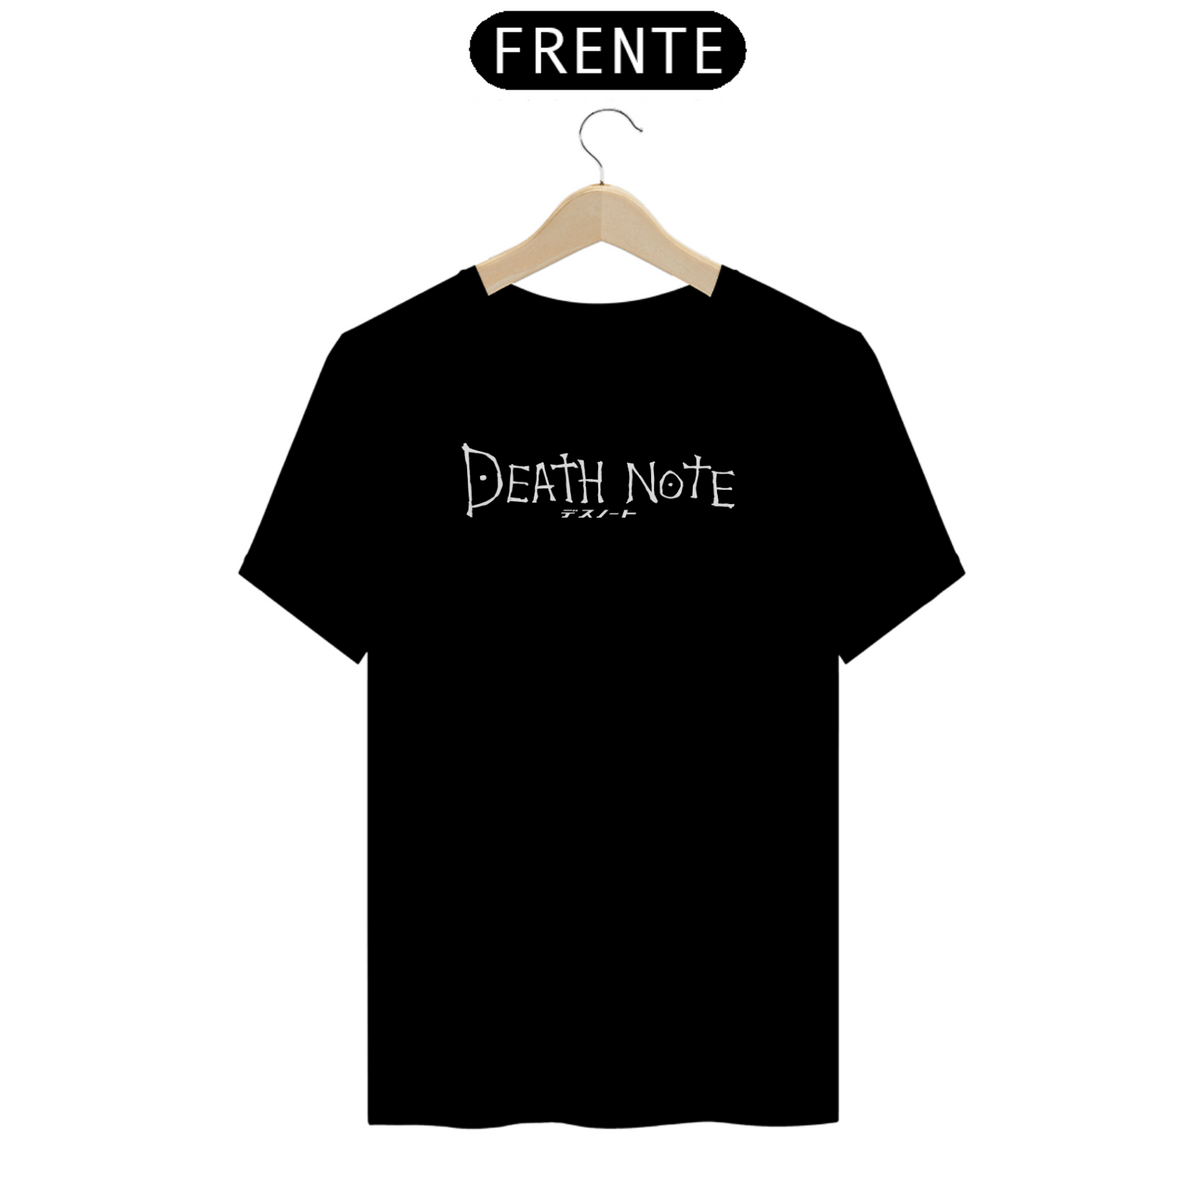 Nome do produto: T-shirt Death Note Preta